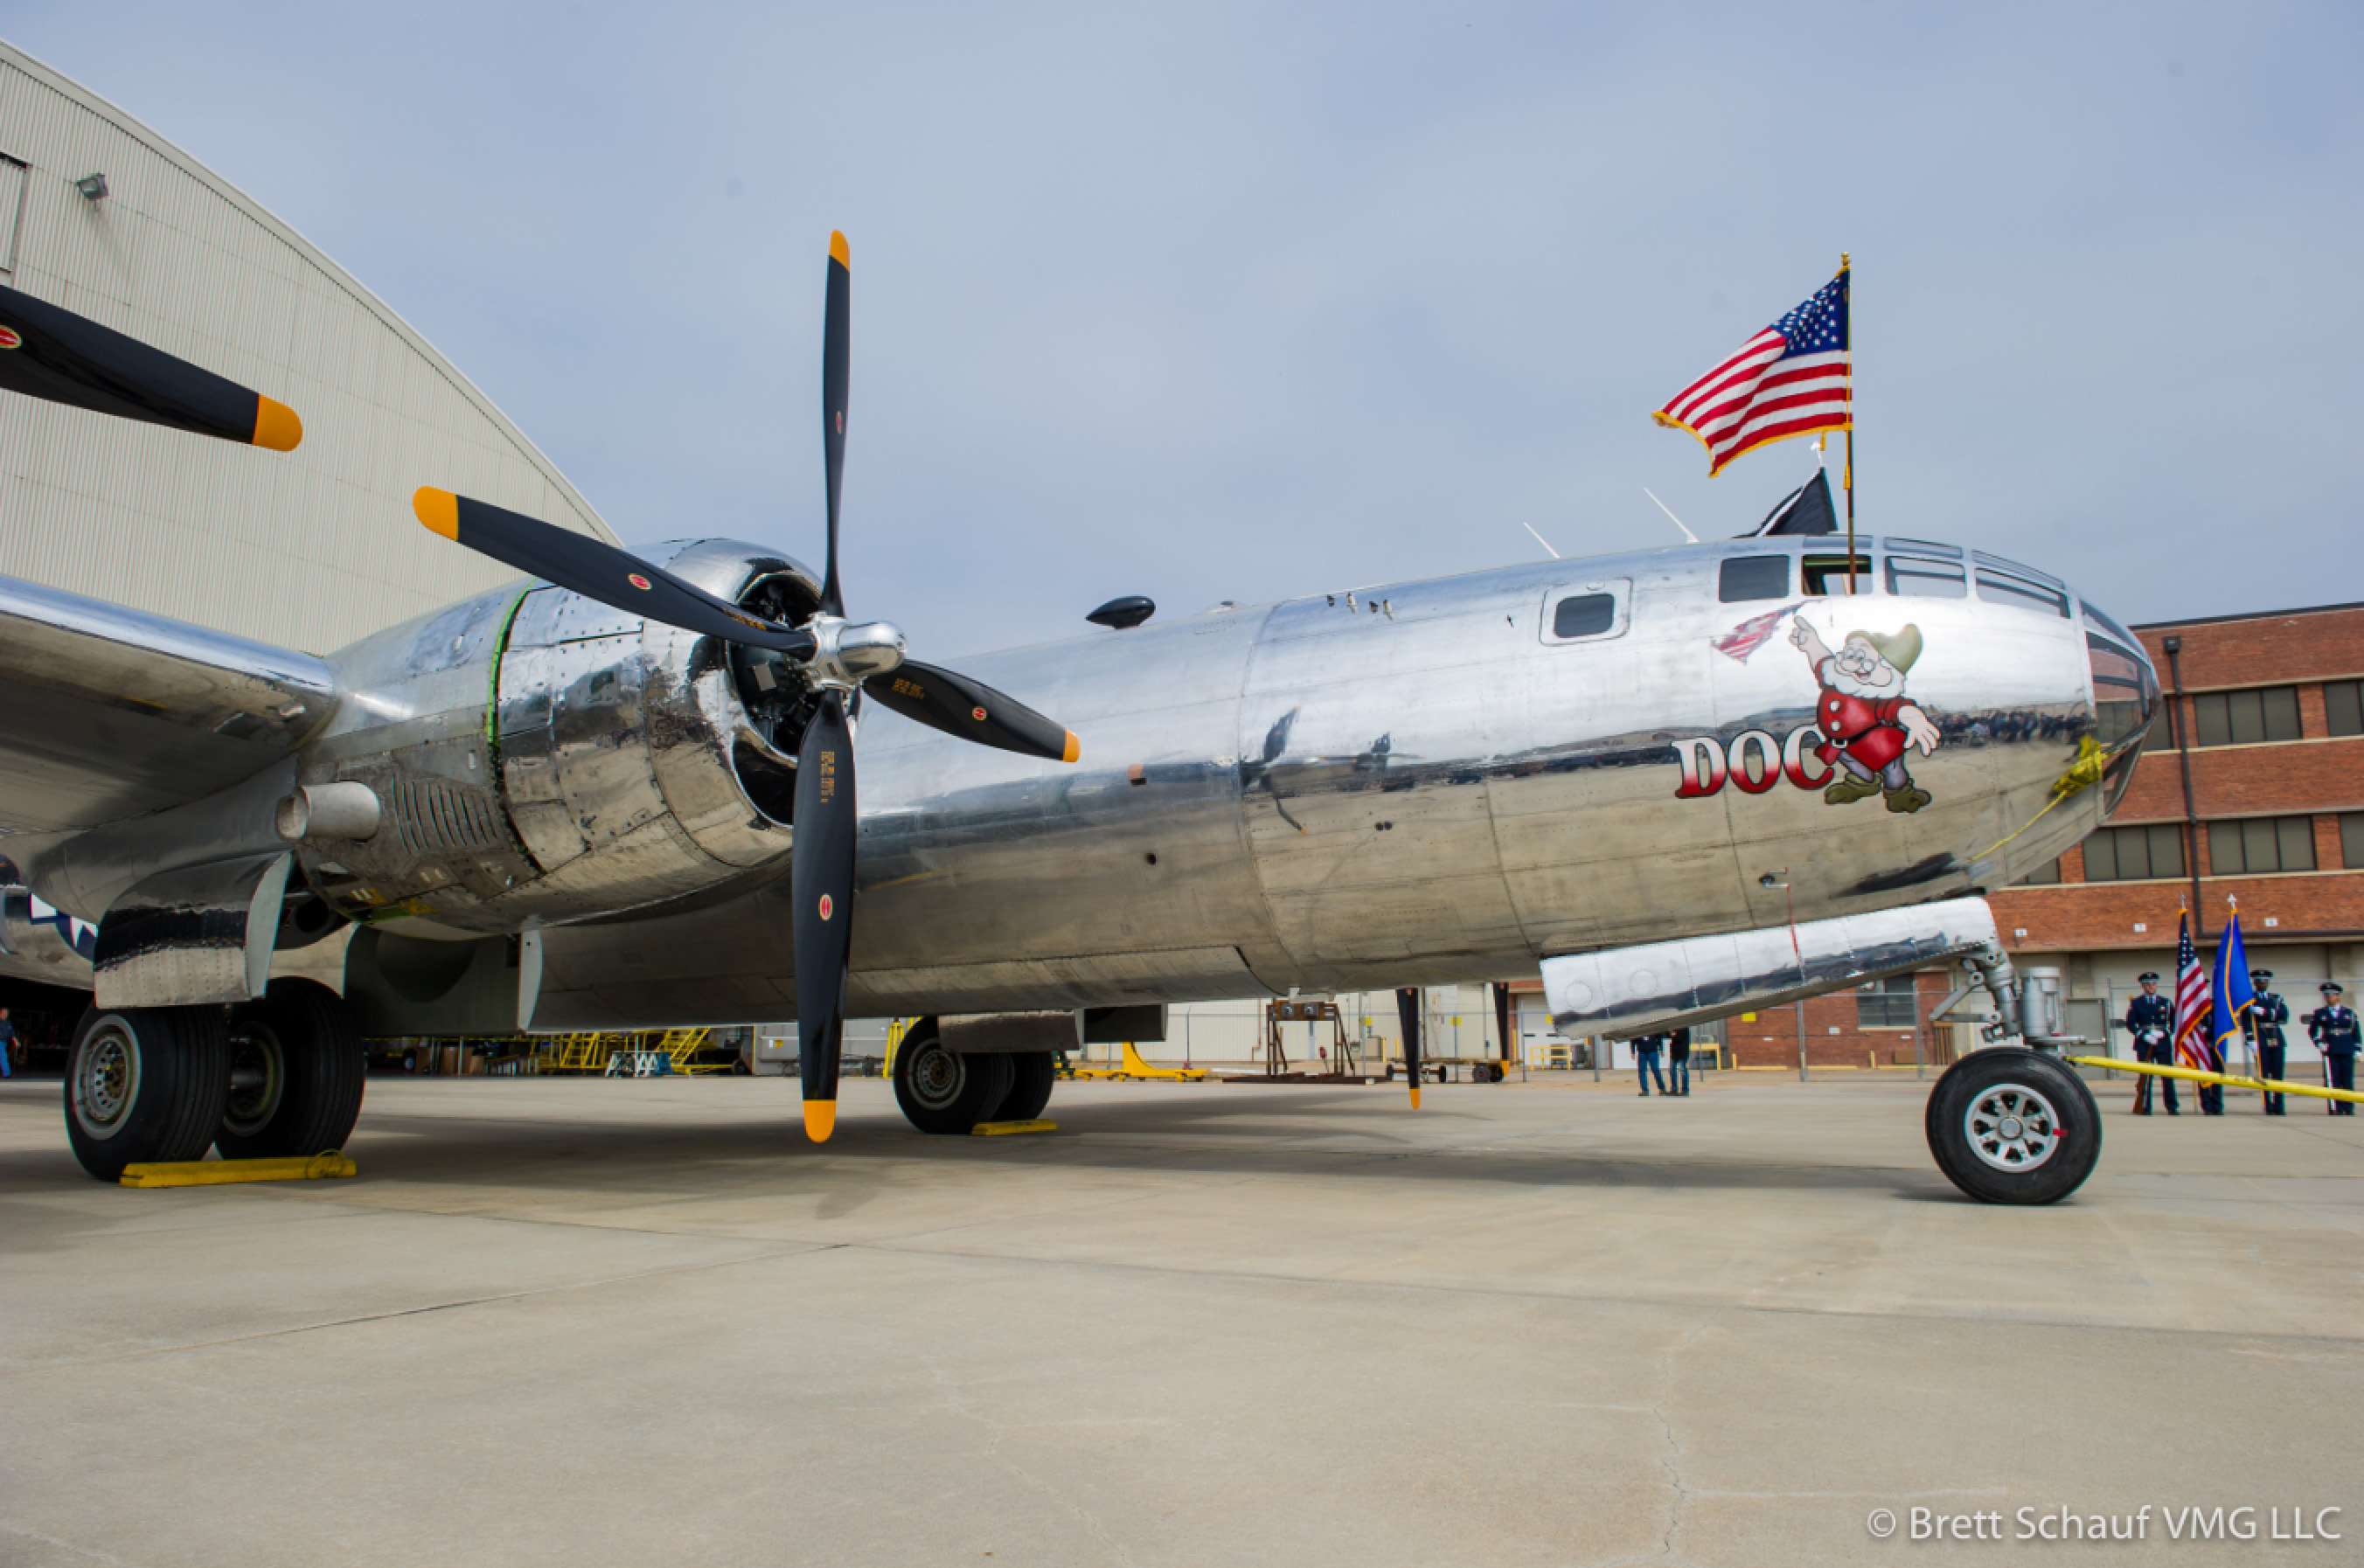 b-29 restoration "doc" enters final stage before flight